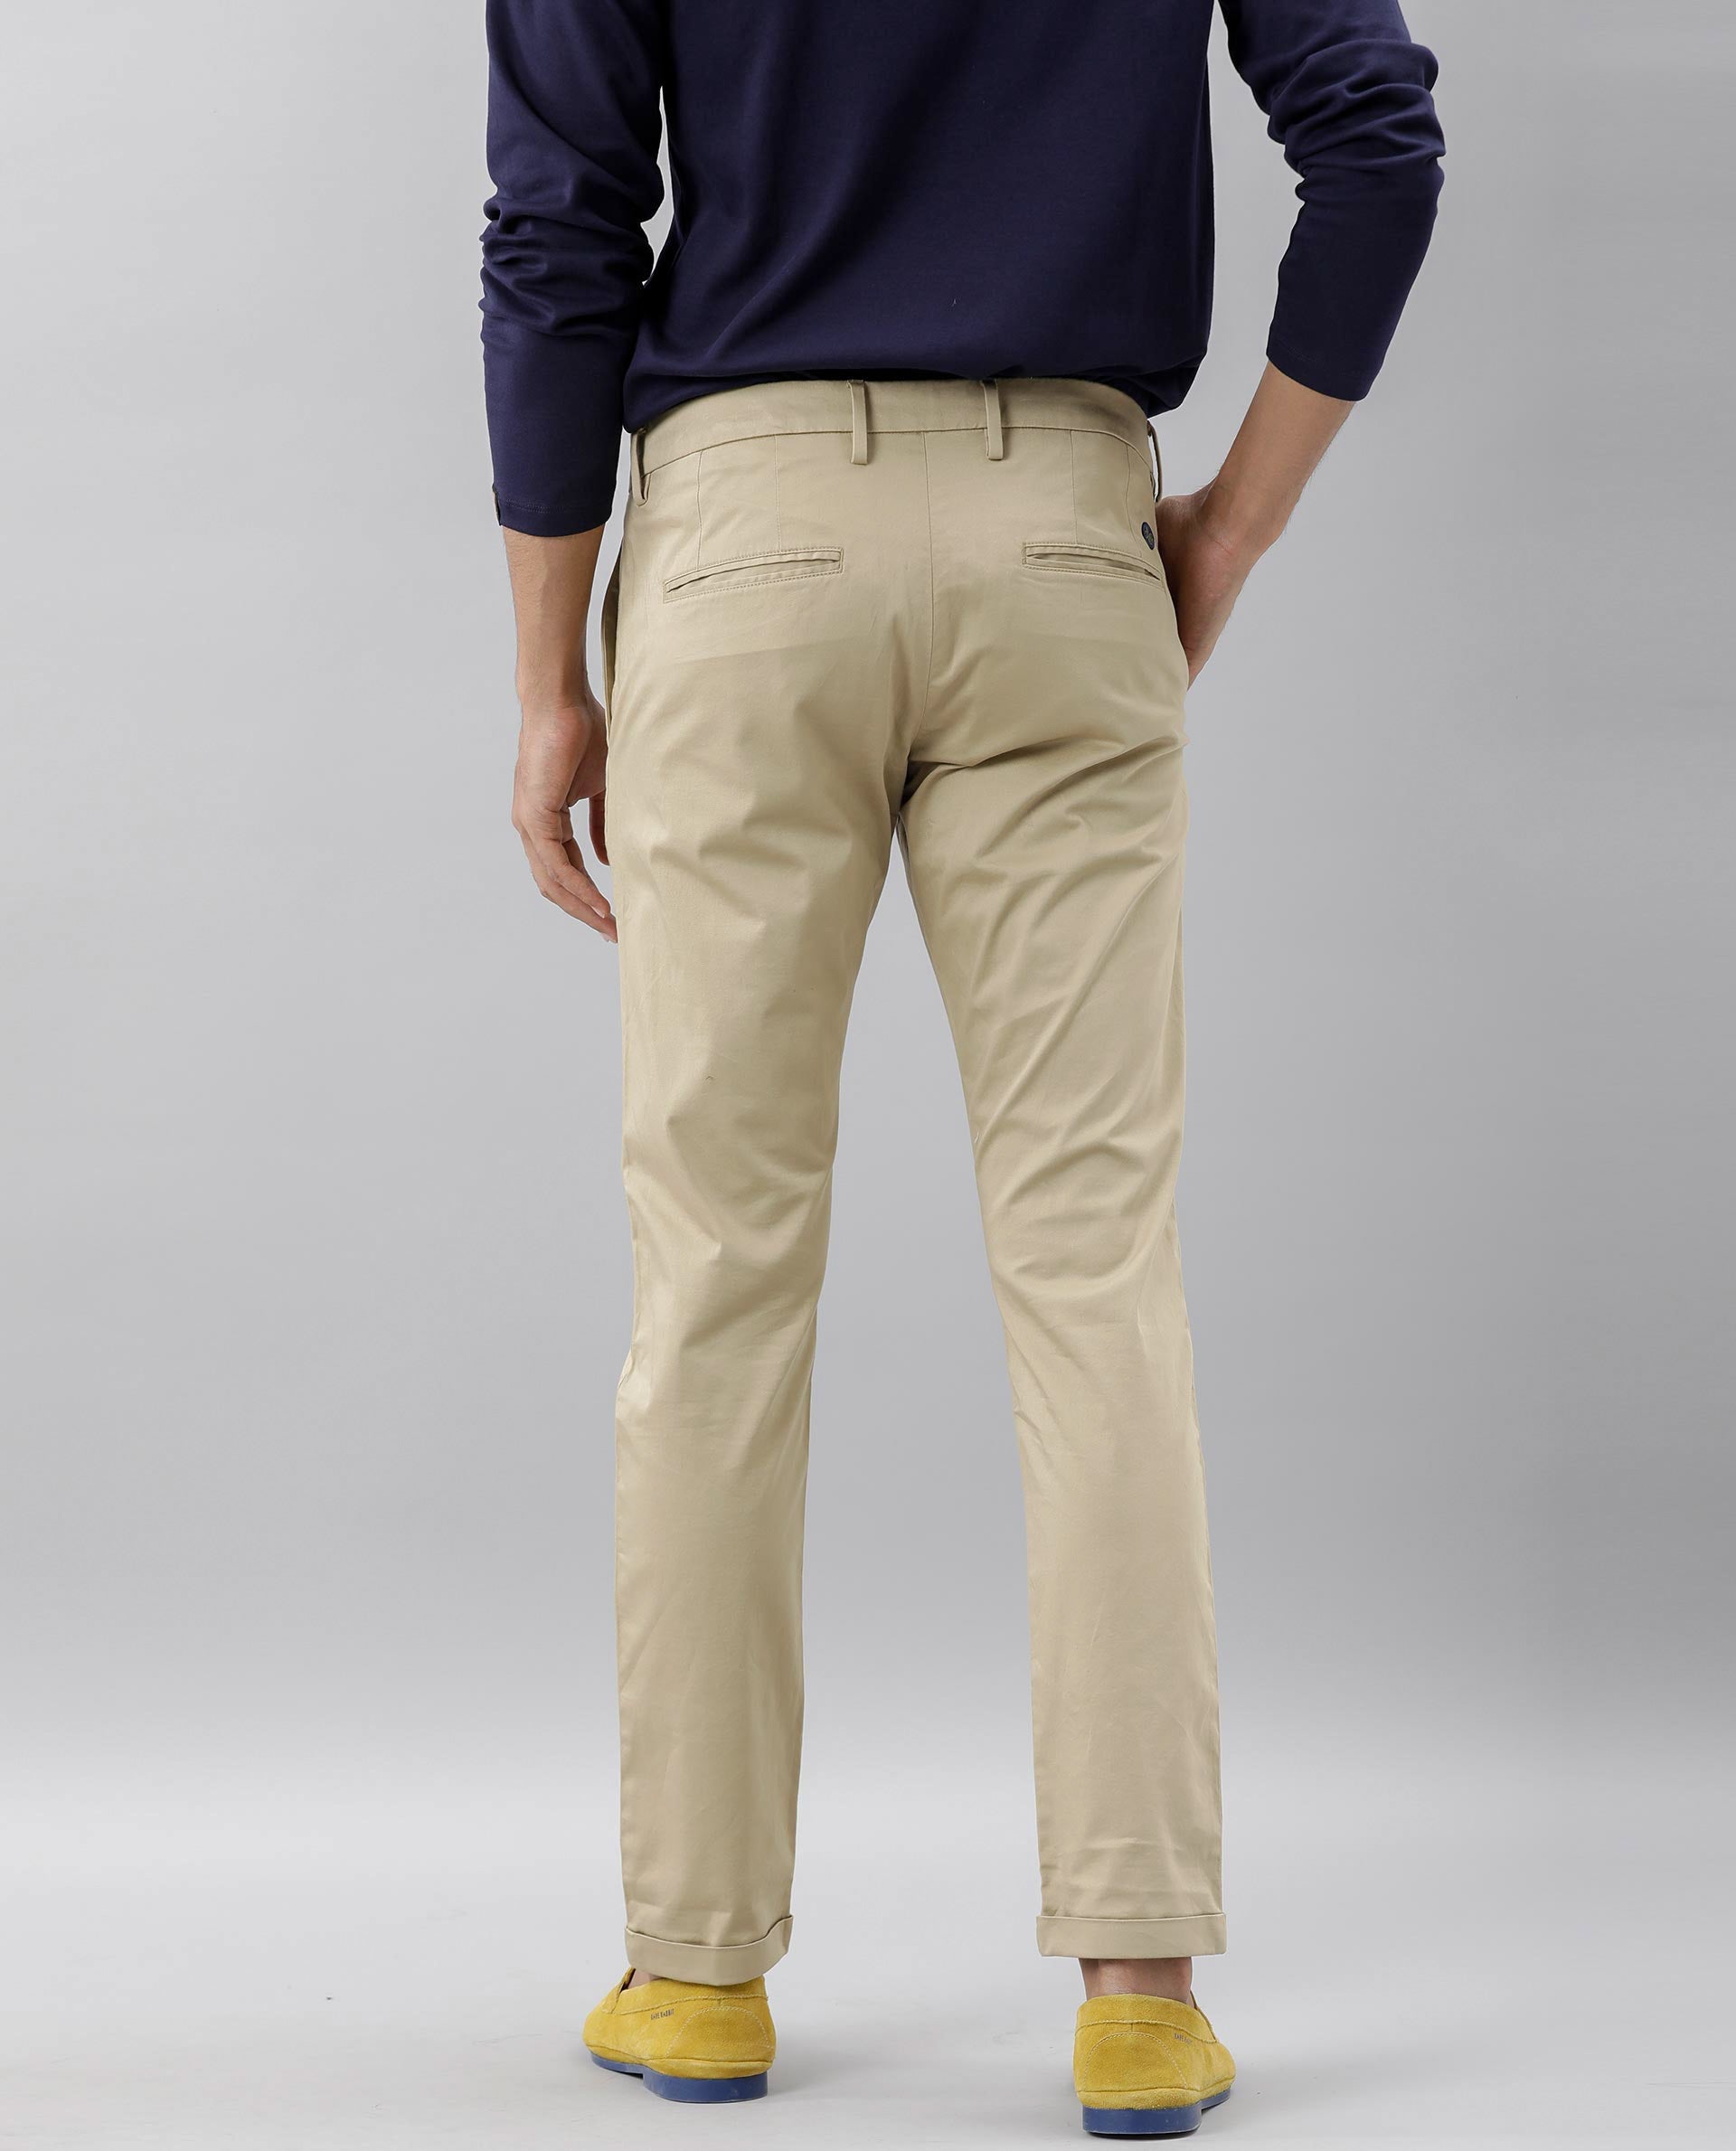 Buy DwellFab Men's Beige Slimfit Formal Trouser - 28 at Amazon.in